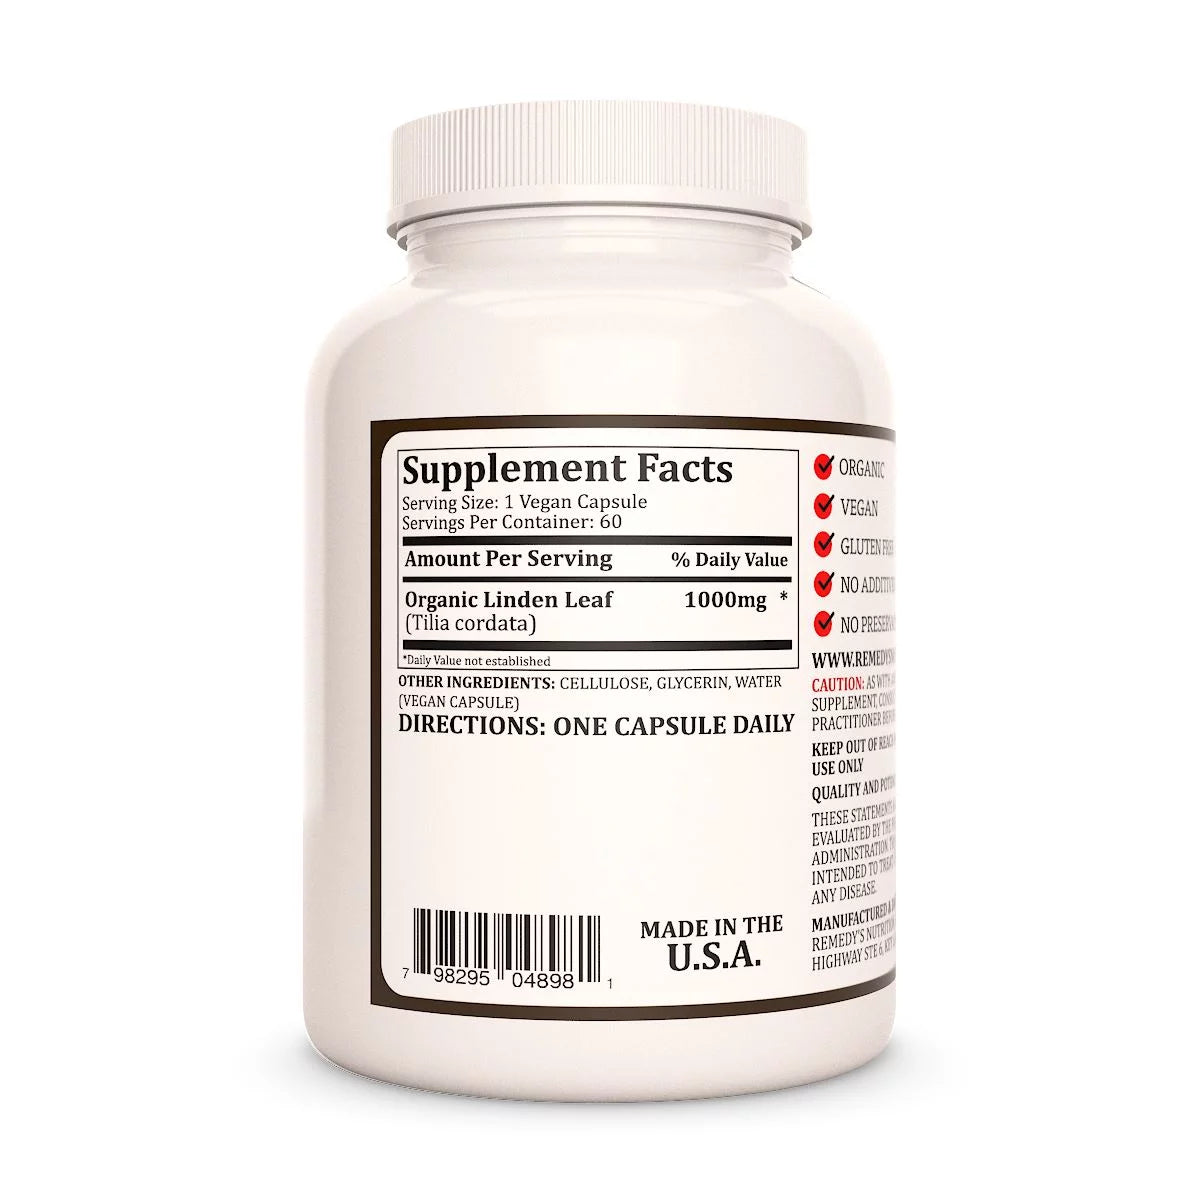 Image of Remedy's Nutrition® Linden Leaf back bottle label. Supplement Facts, Ingredients and Directions. Tilia cordata.